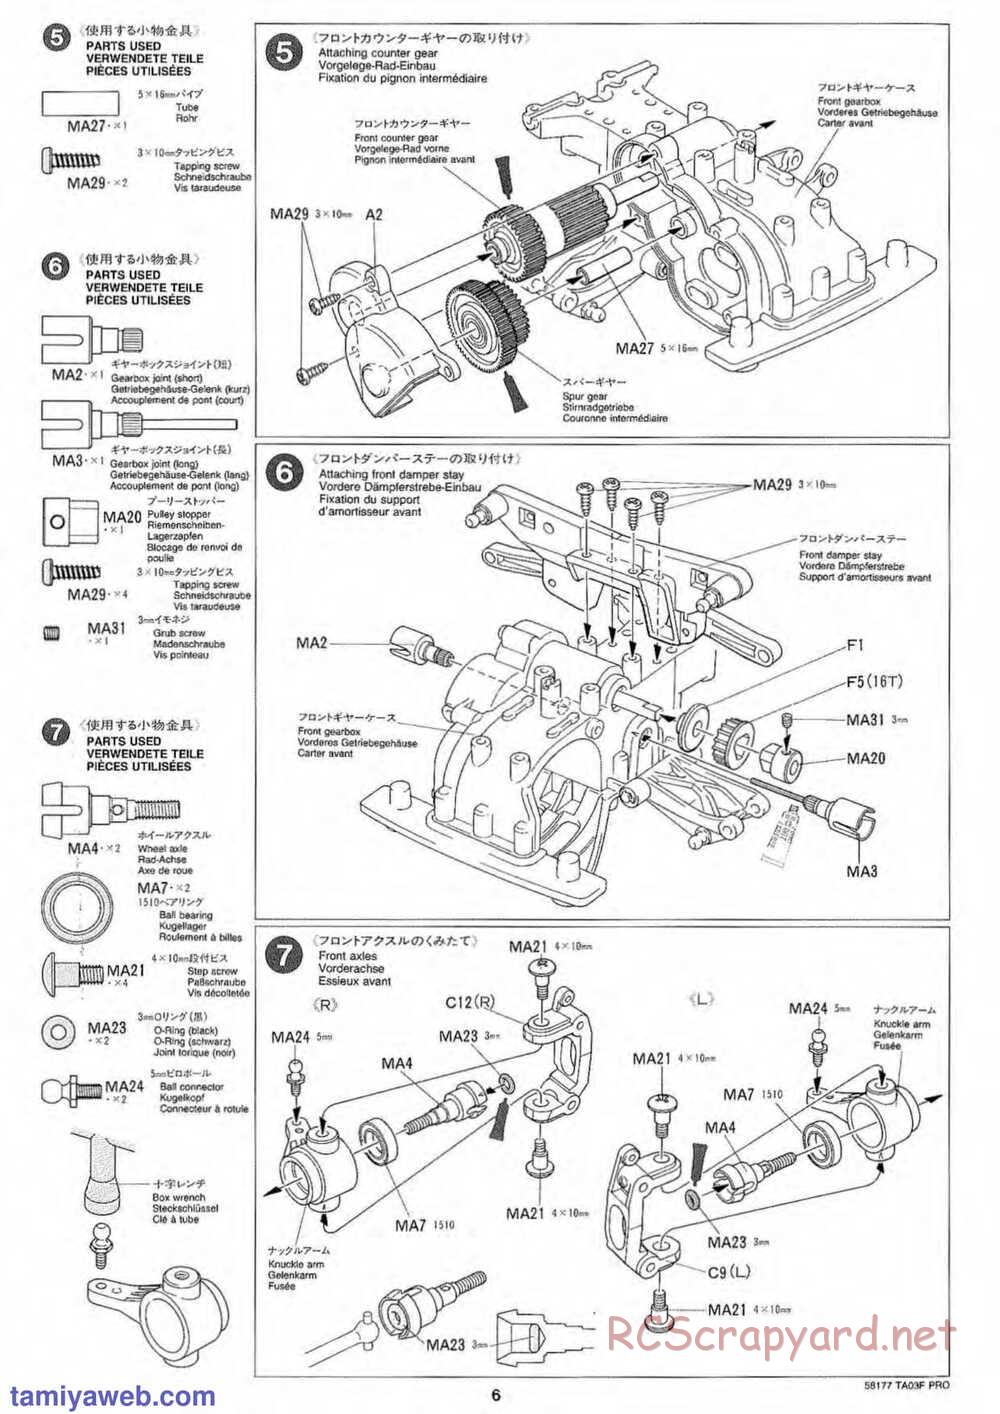 Tamiya - TA-03F Pro Chassis - Manual - Page 6